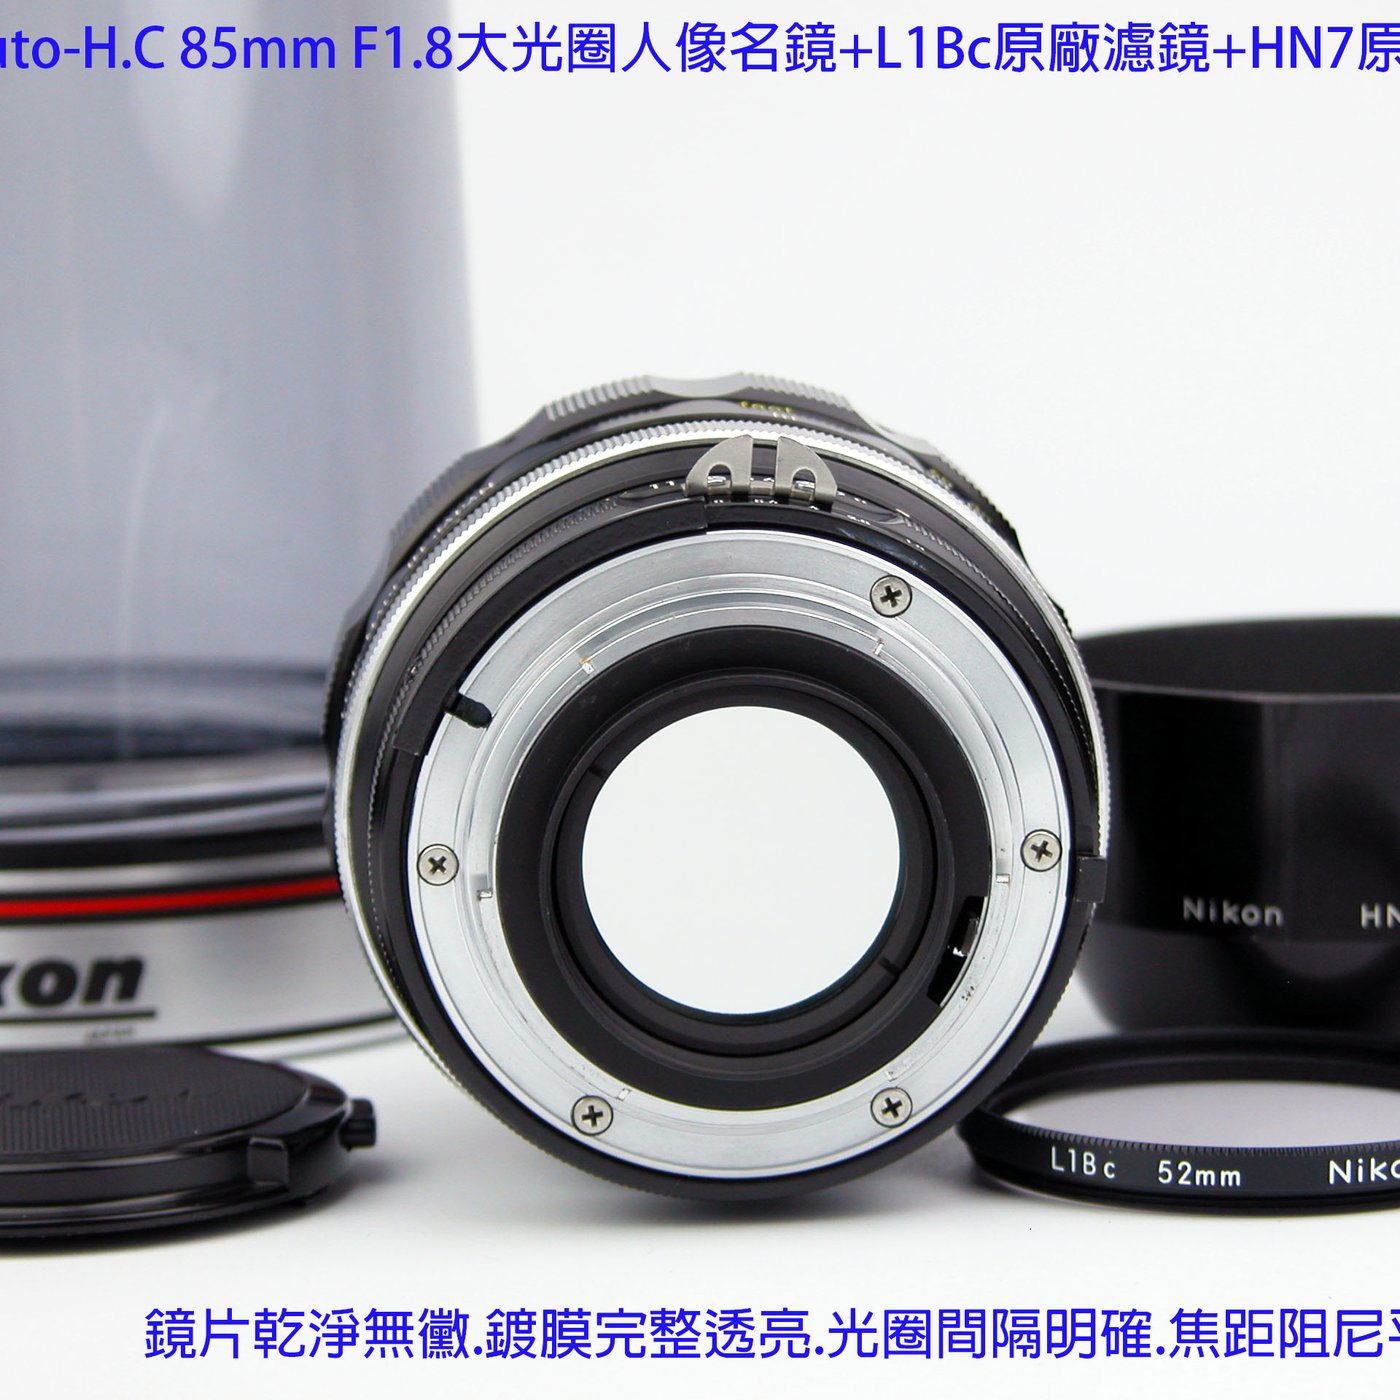 Nikon Auto-H.C 85mm F1.8大光圈人像名鏡+稀少Aid光圈環+L1Bc原廠濾鏡+